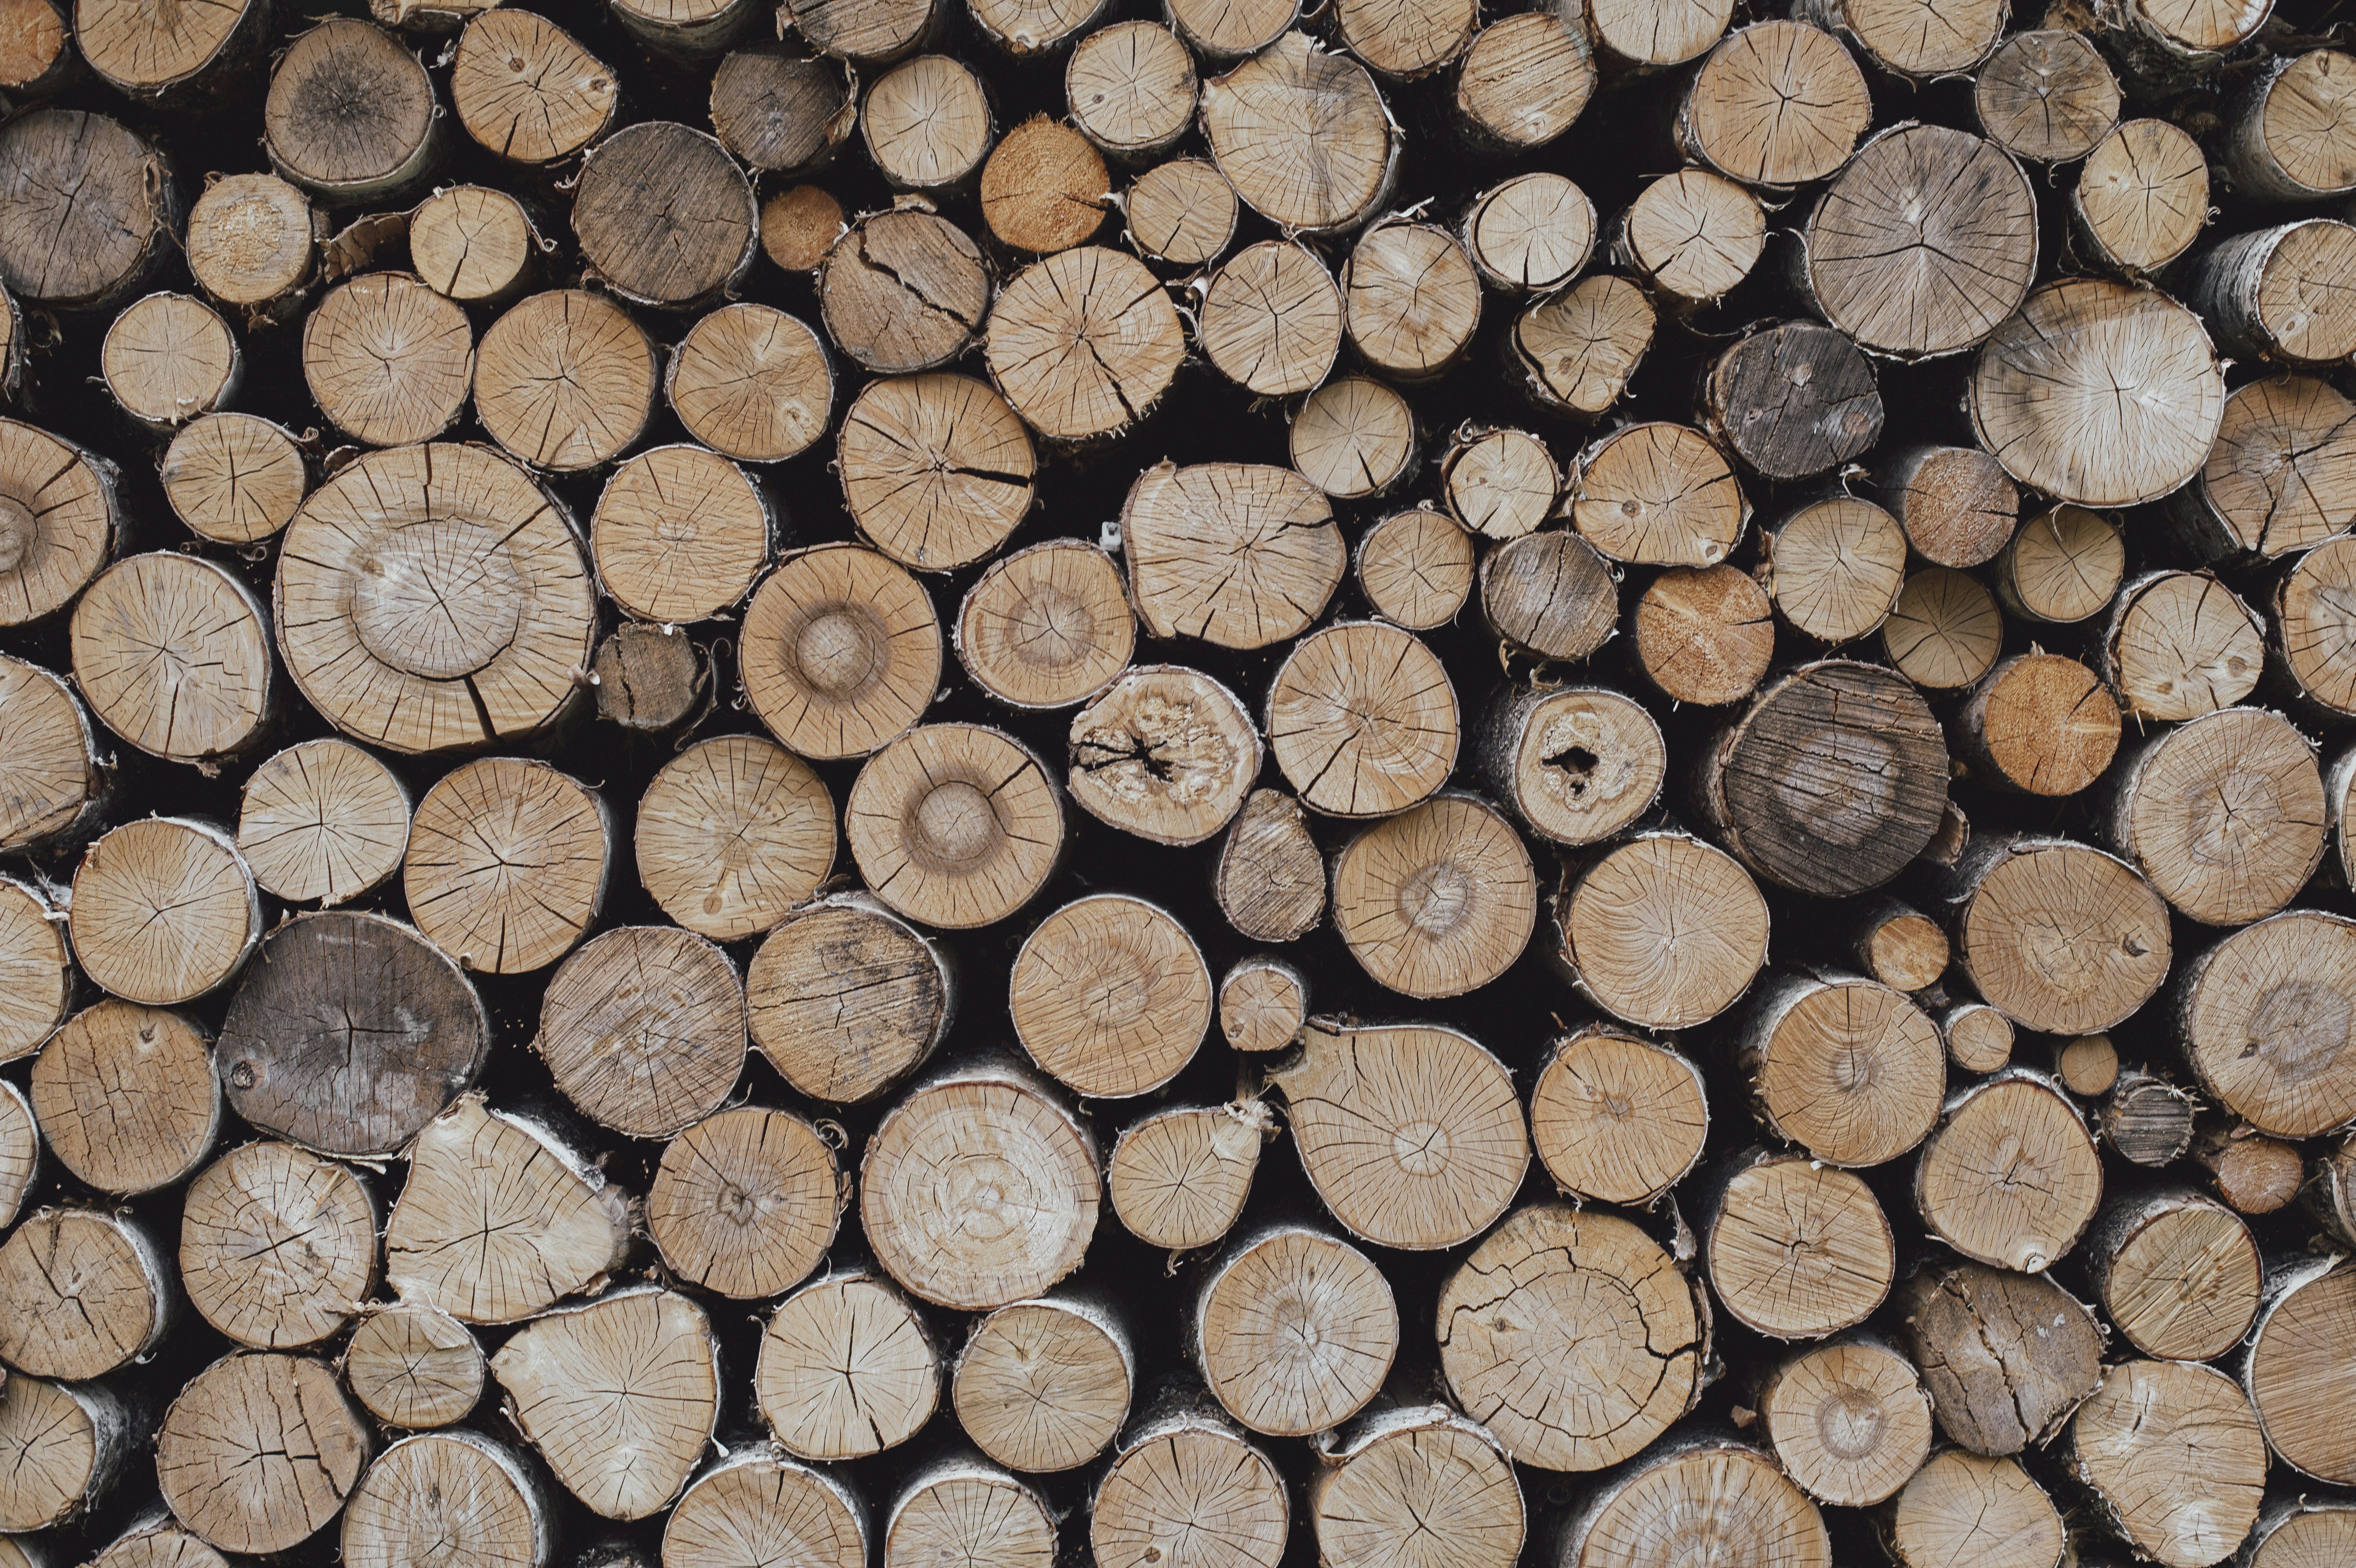 a pile of cut logs